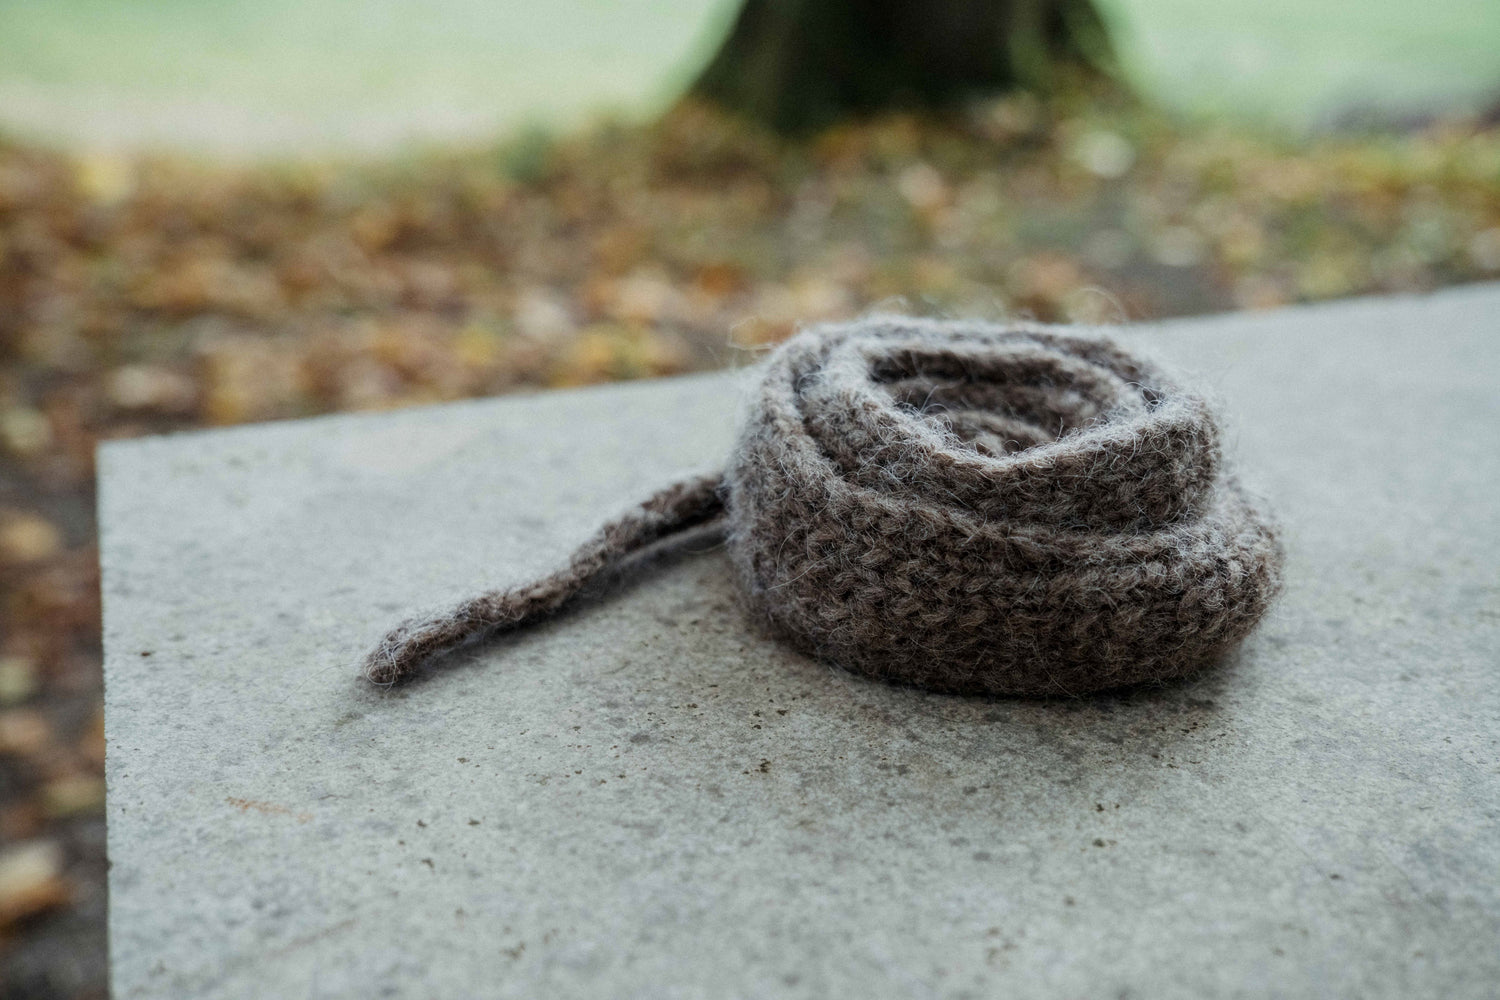 Grey-brown HAZEL SCARF with I-cord edge and slip-stitch, on concrete, Nutiden yarn, blurred autumn backdrop.